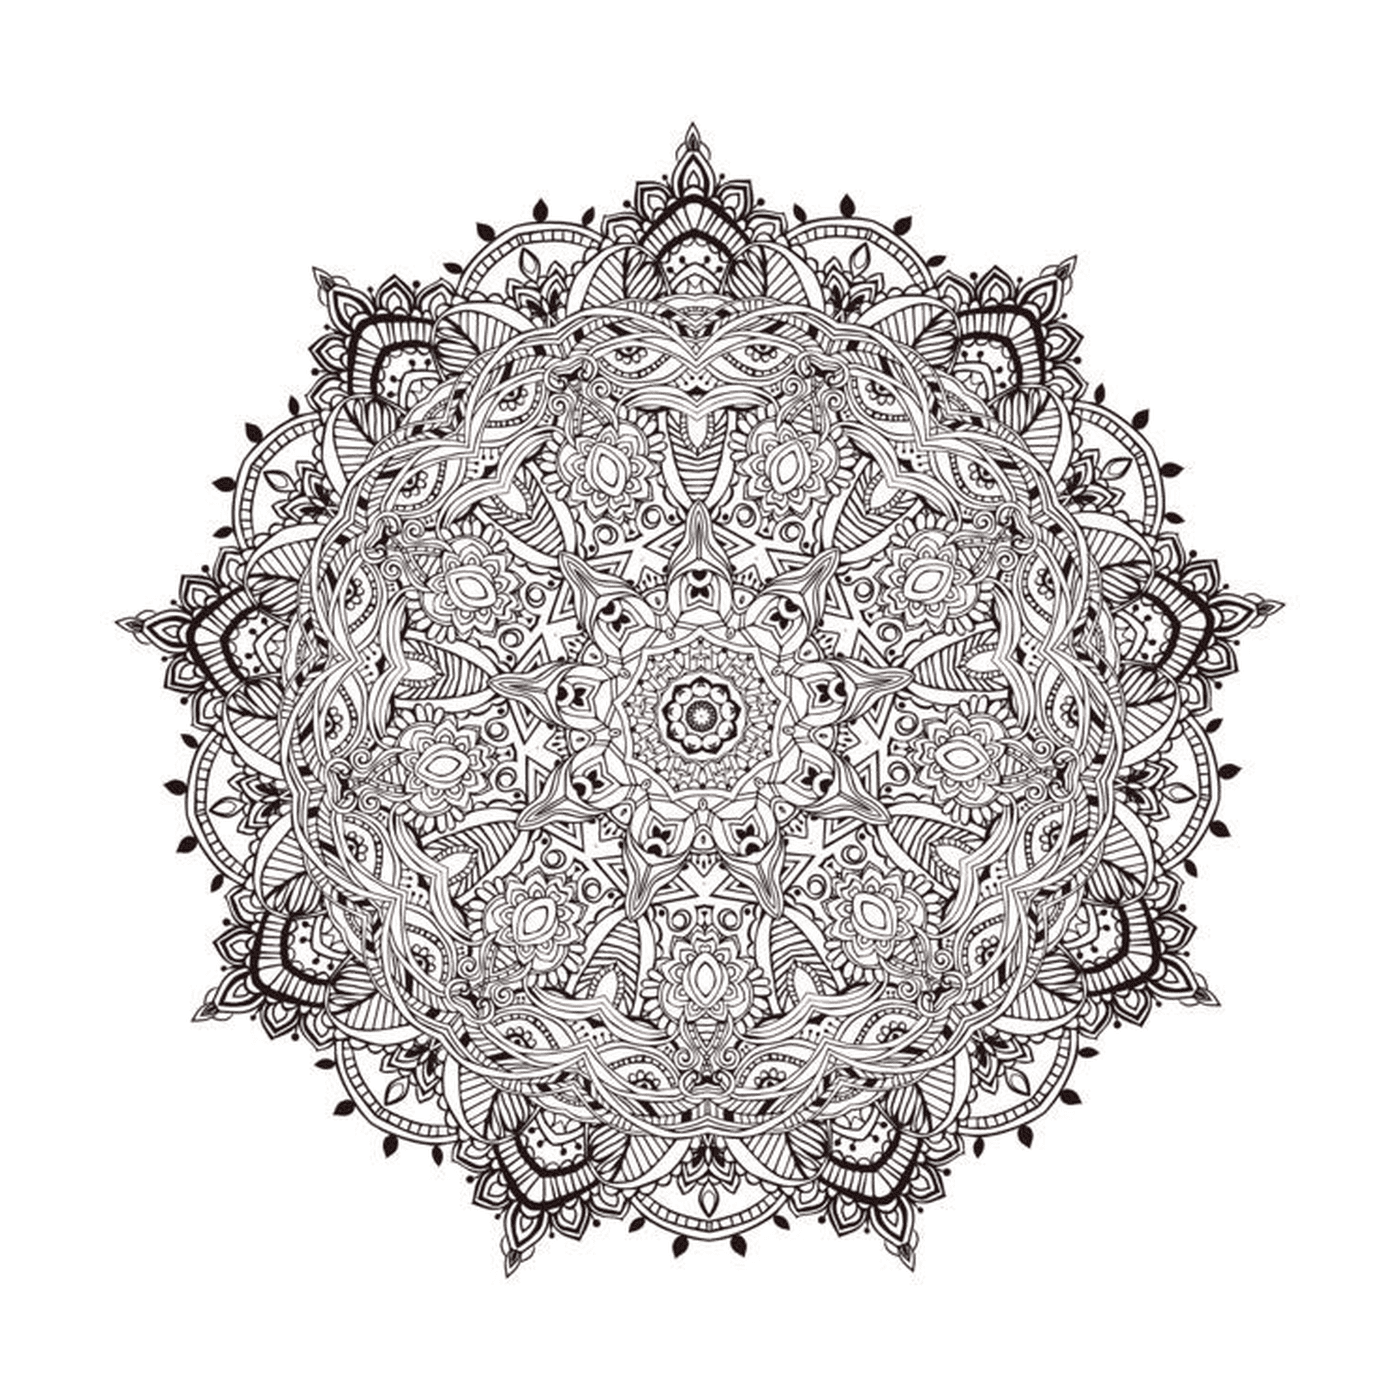  Detailed Mandala with floral motif 